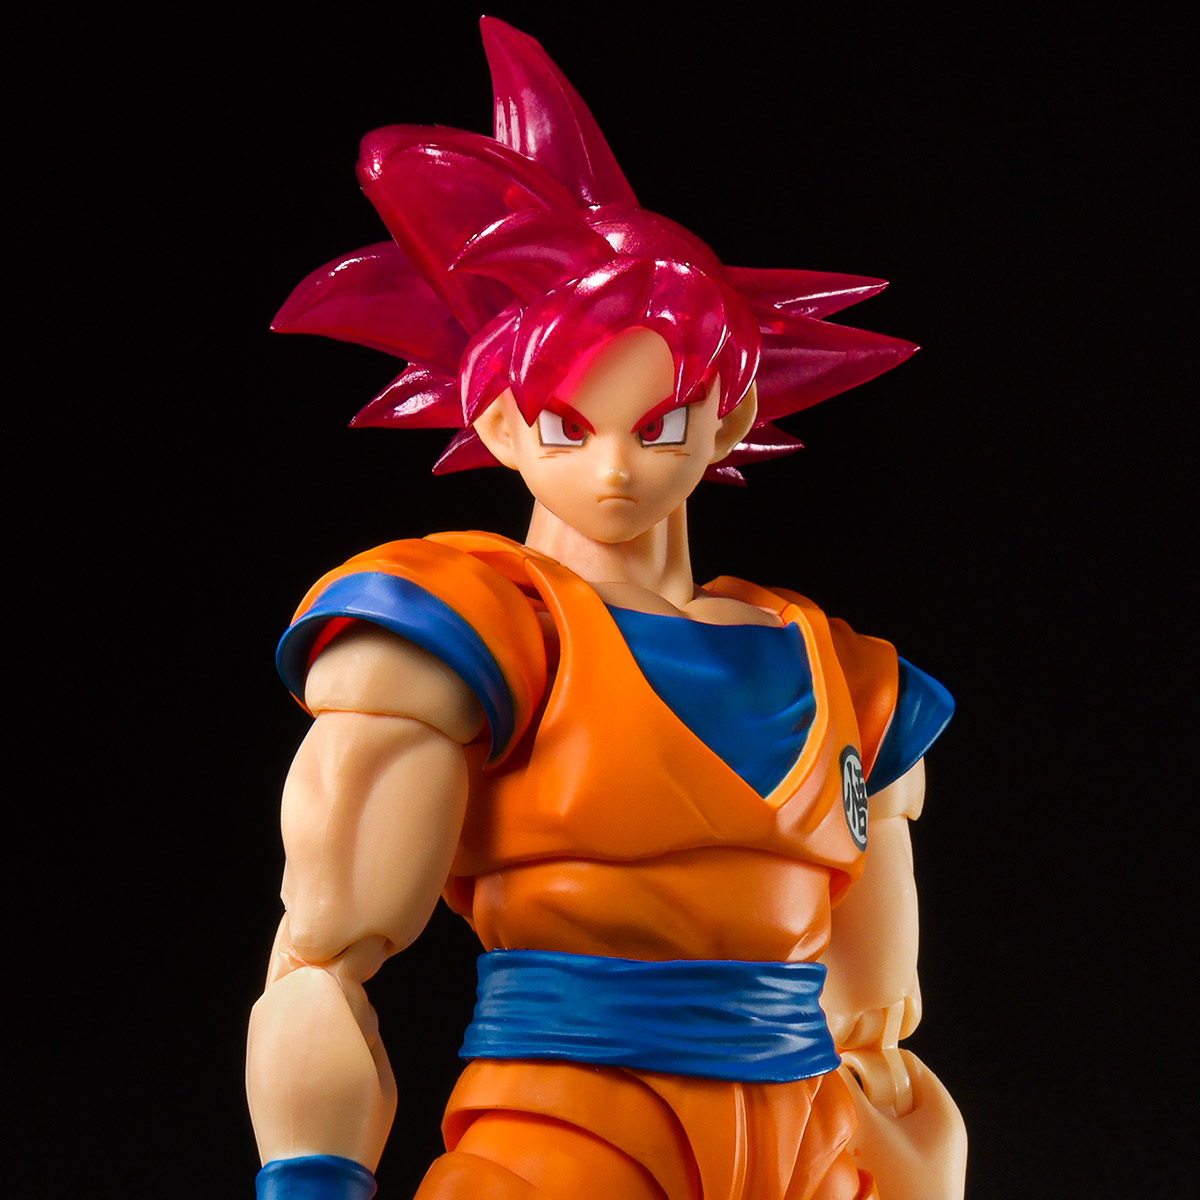 Shfiguarts Super Saiyan God Son Goku Event Exclusive Color Edition